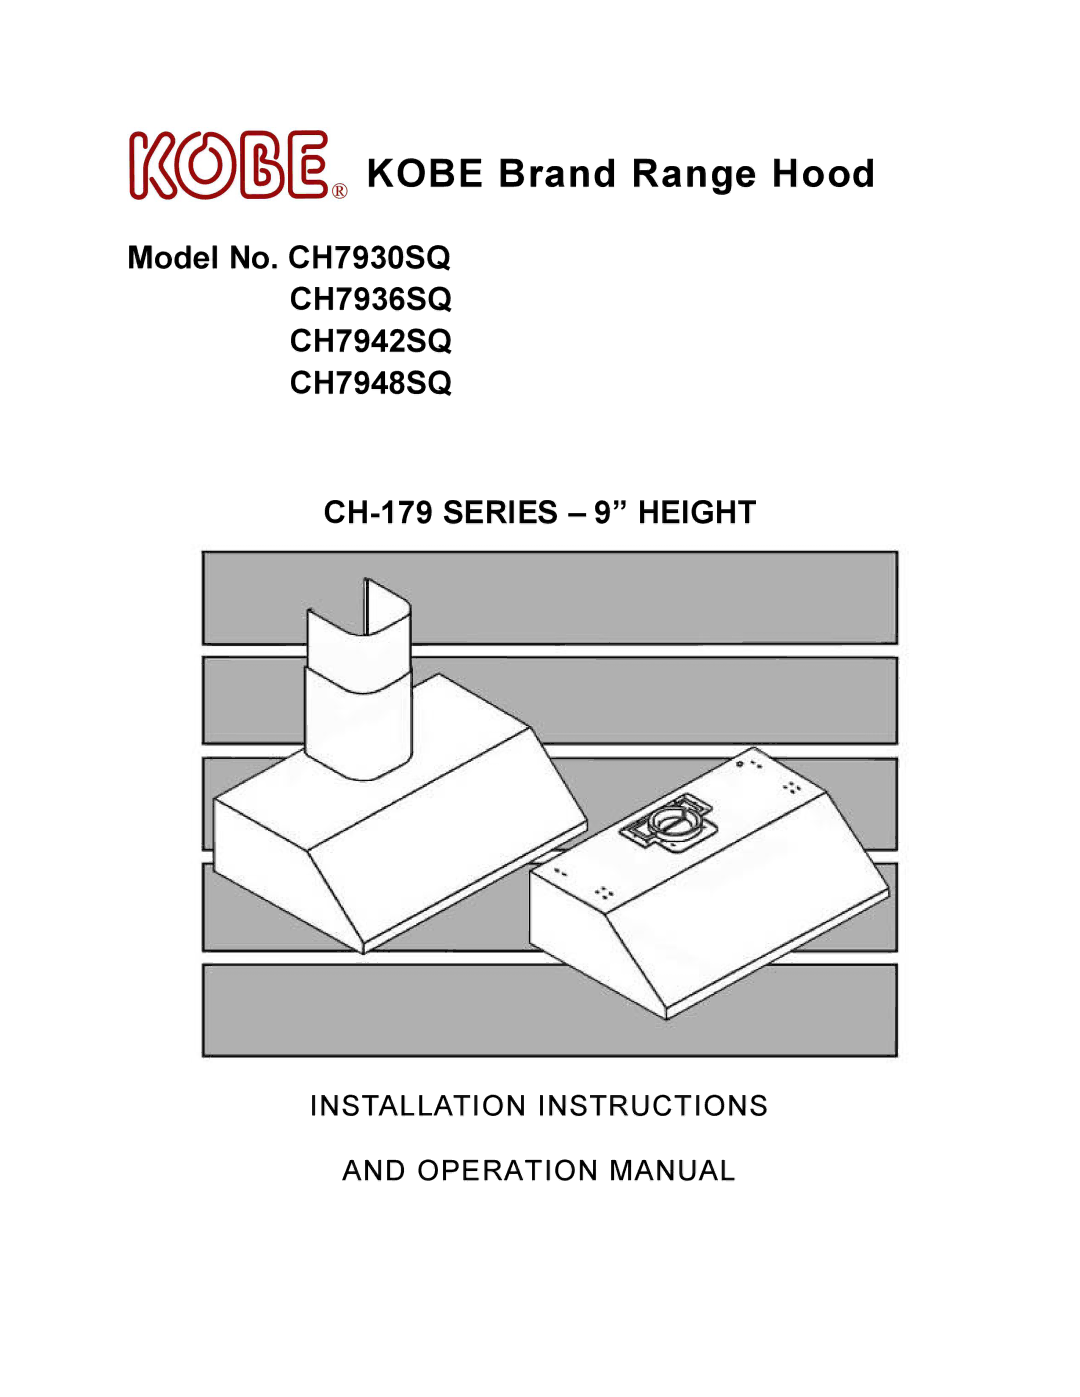 Kobe Range Hoods CH7930SQ, CH7948SQ, CH7942SQ, CH7936SQ manual Kobe Brand Range Hood 